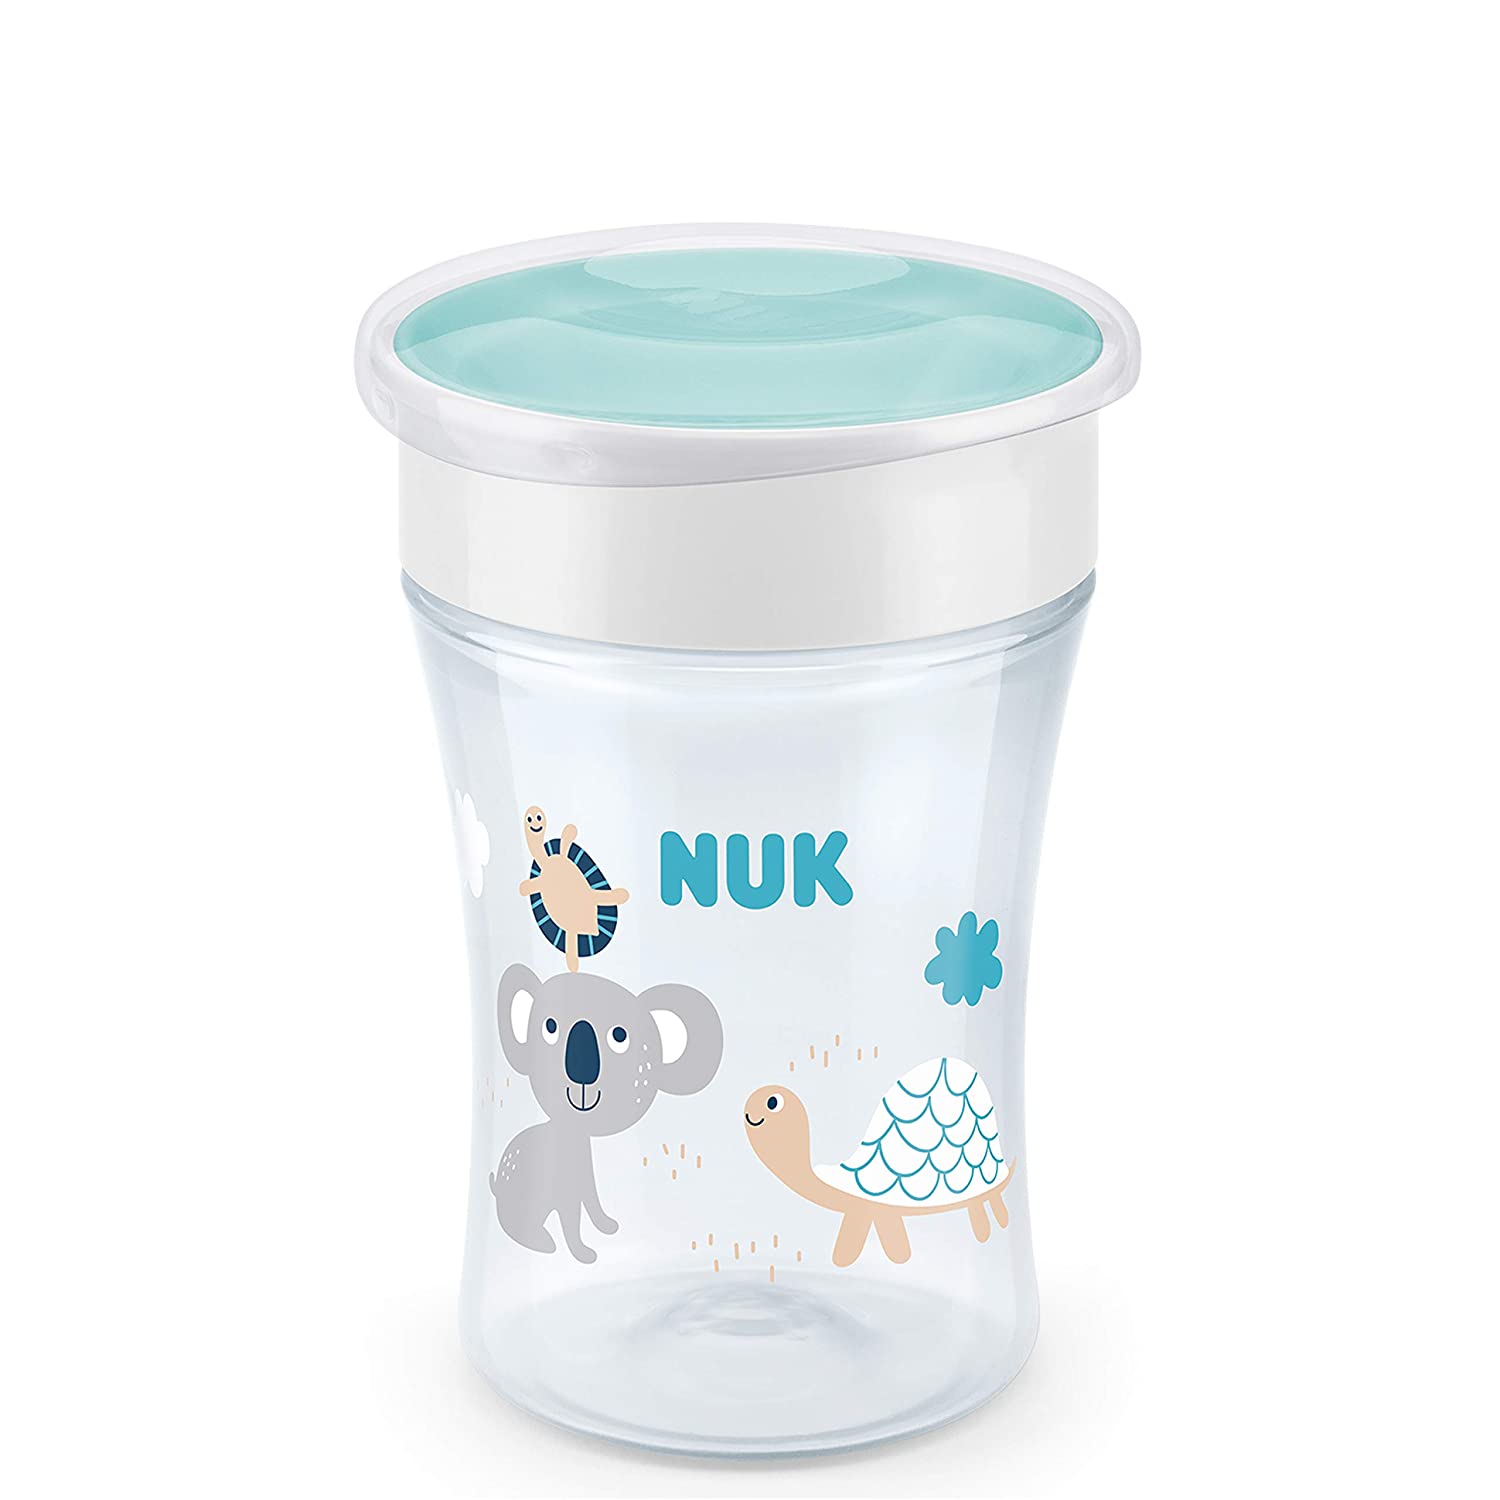 NUK Magic Cup learning cup | leak-proof 360 ° drinking rim | 8+ months | BPA free | 230 ml | Koala / turtle (white)